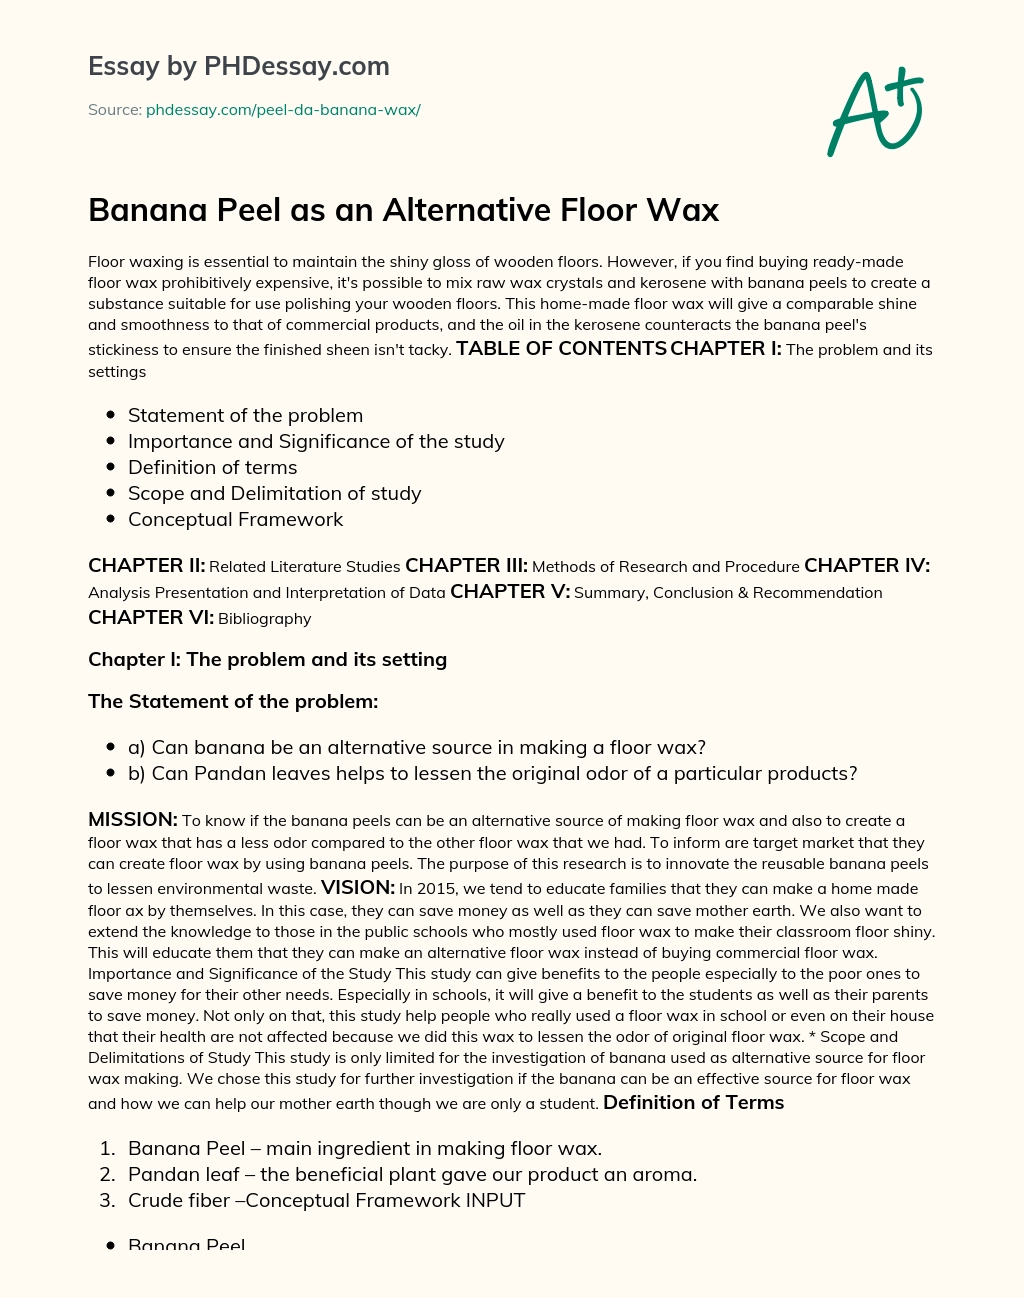 Banana Peel as an Alternative Floor Wax essay